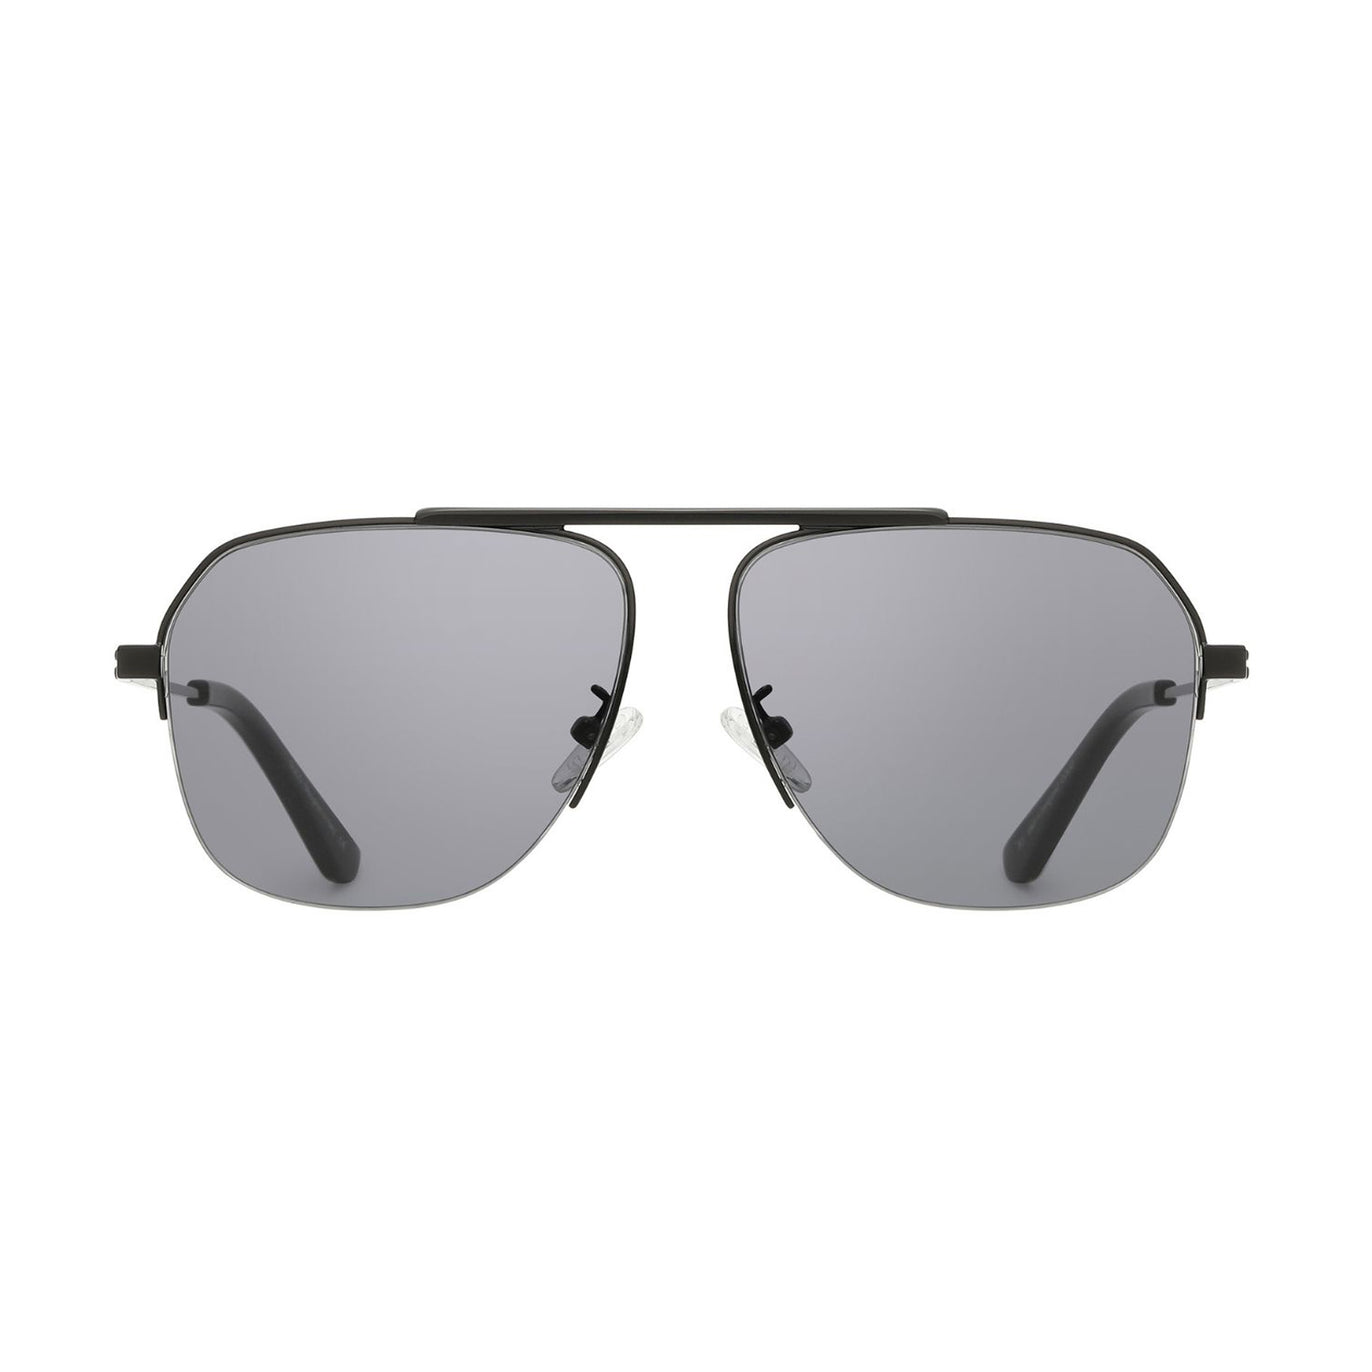 Duco Retro Sunglasses for Mens Non-Polarized Sun Glasses for Driving DC3035 Silver Frame Gradient Grey Lens